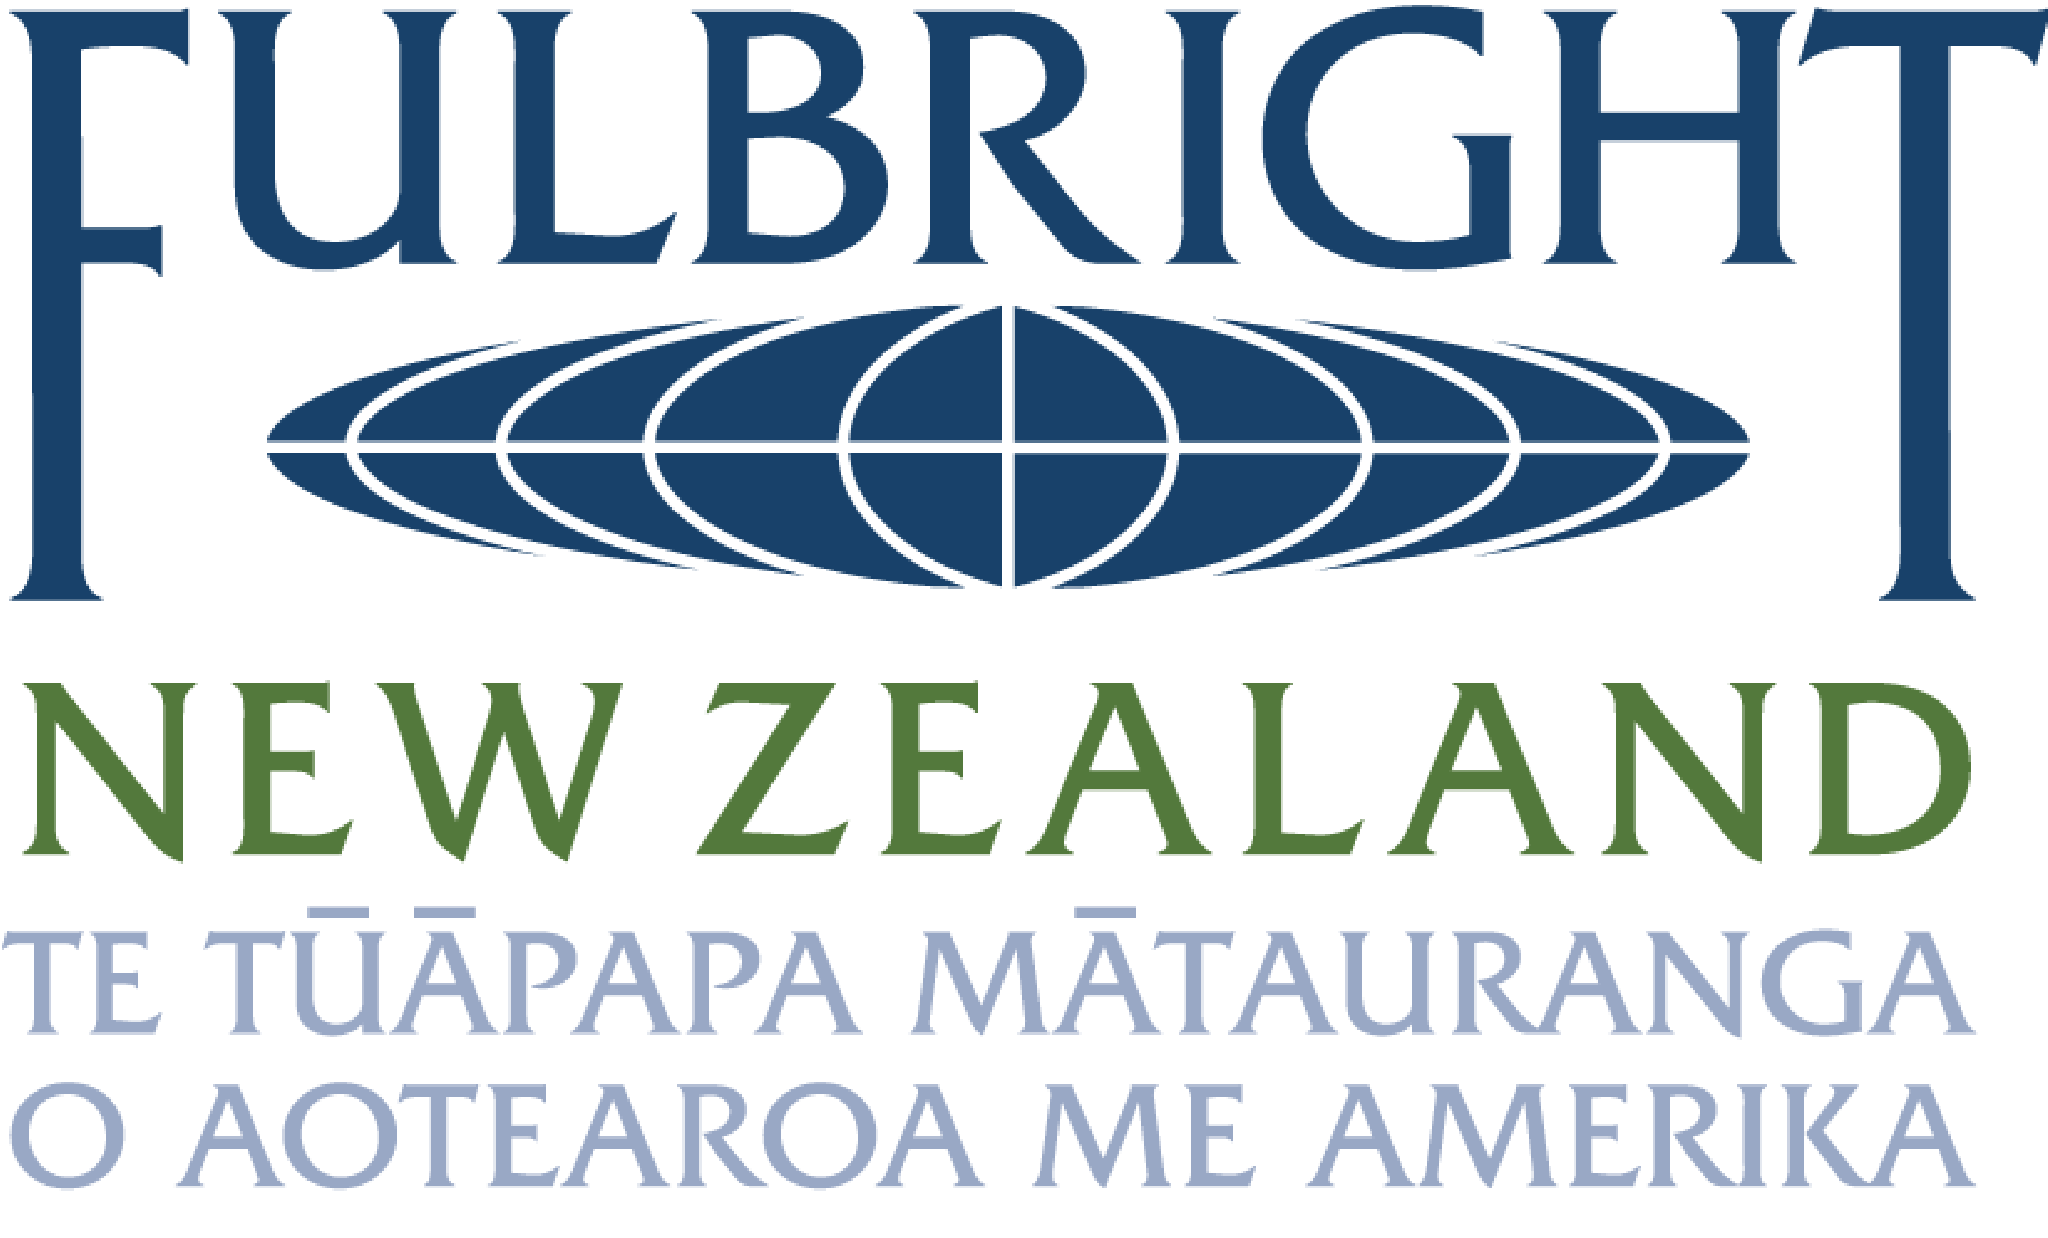 Fulbright New Zealand